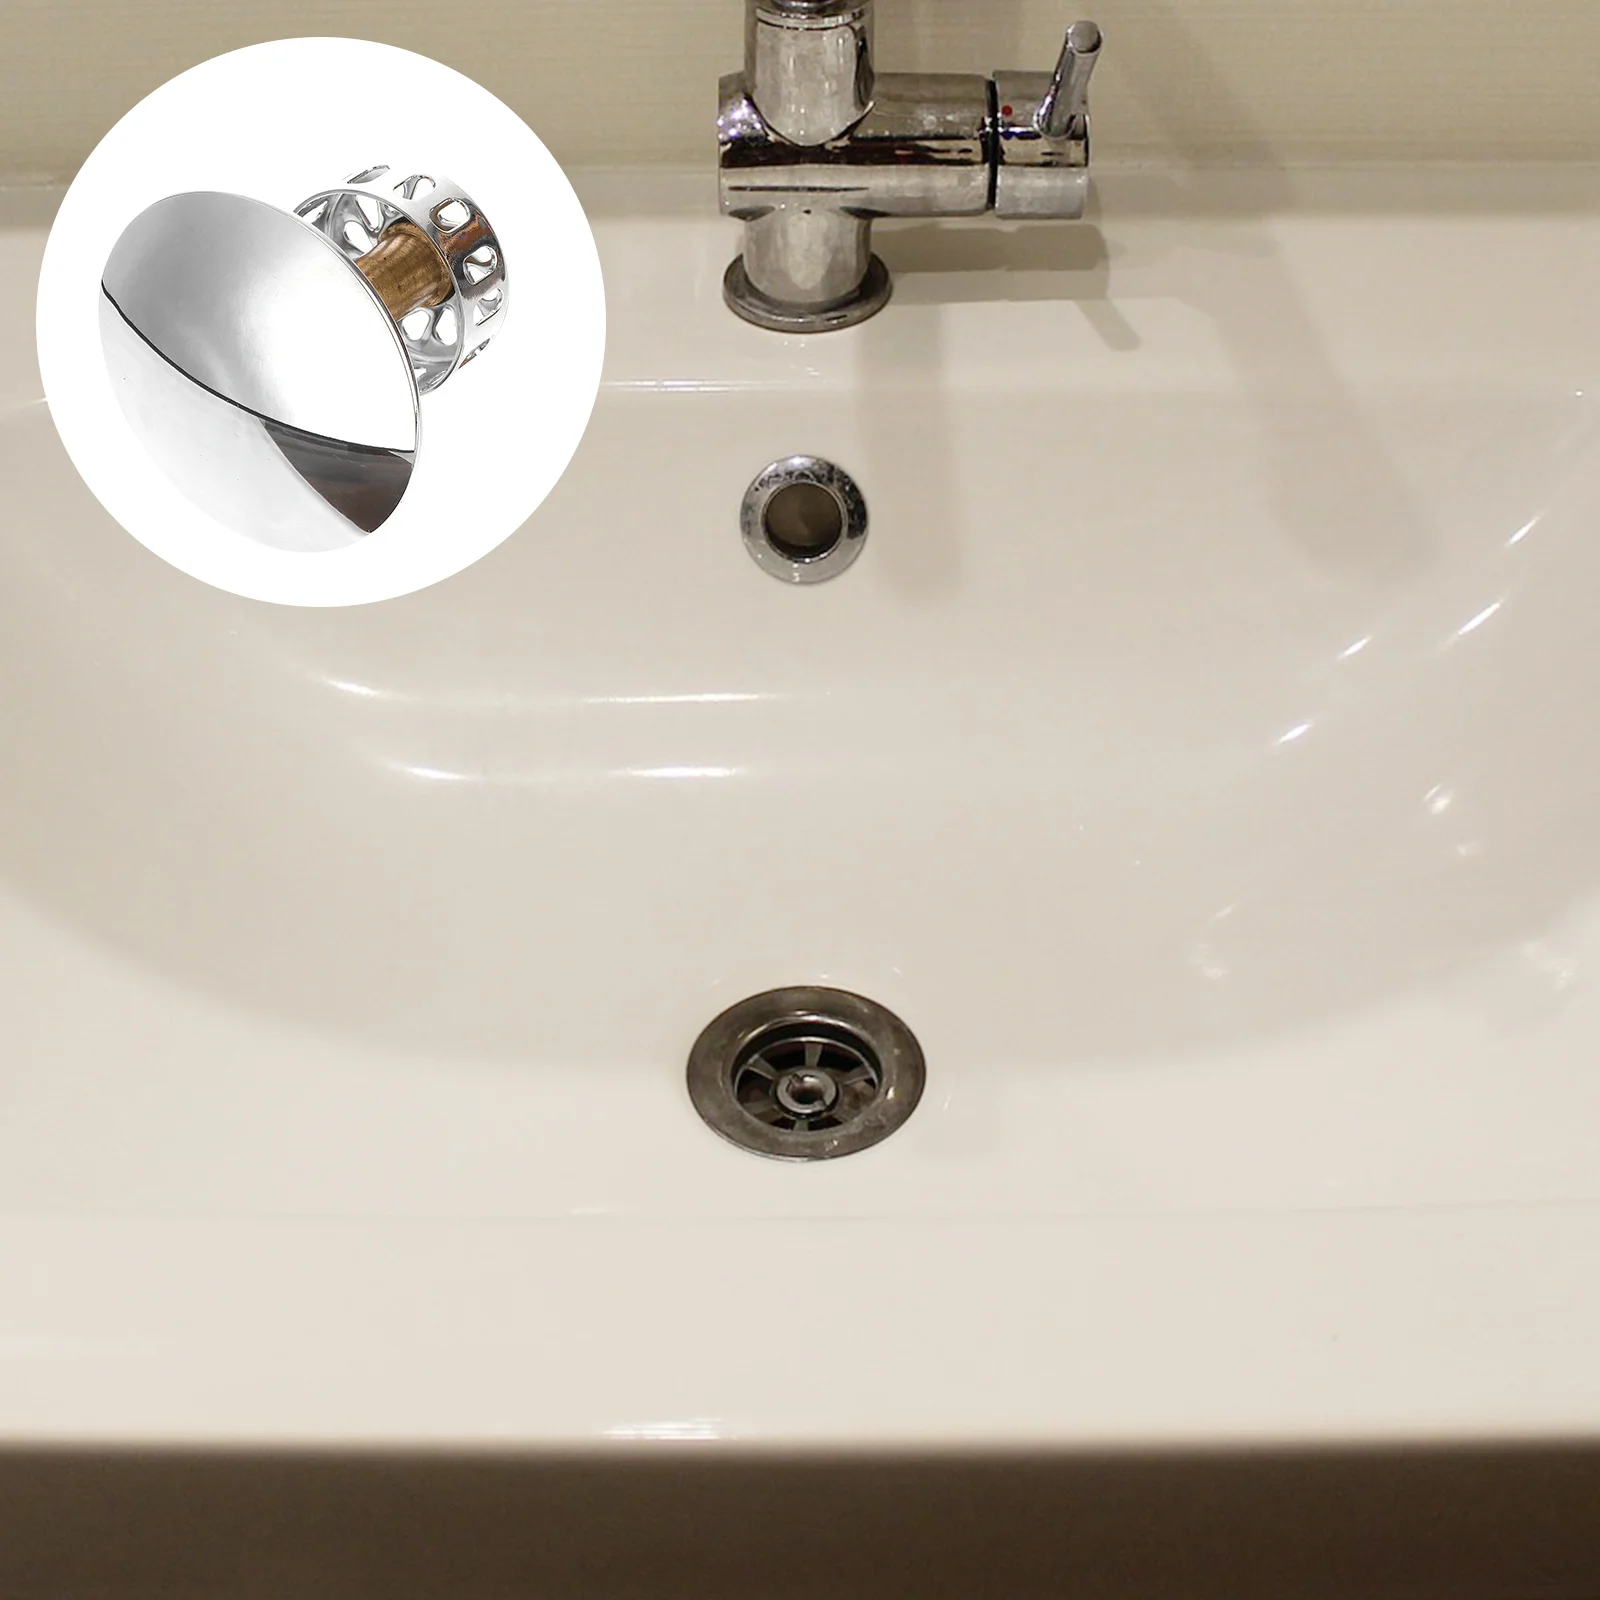 

Sink Drain Bathroom Hair Catcher Strainer Stopper Plug Shower Tub Bath Metal Cover Drainer Waste Bathtub Bounce Bullet Type